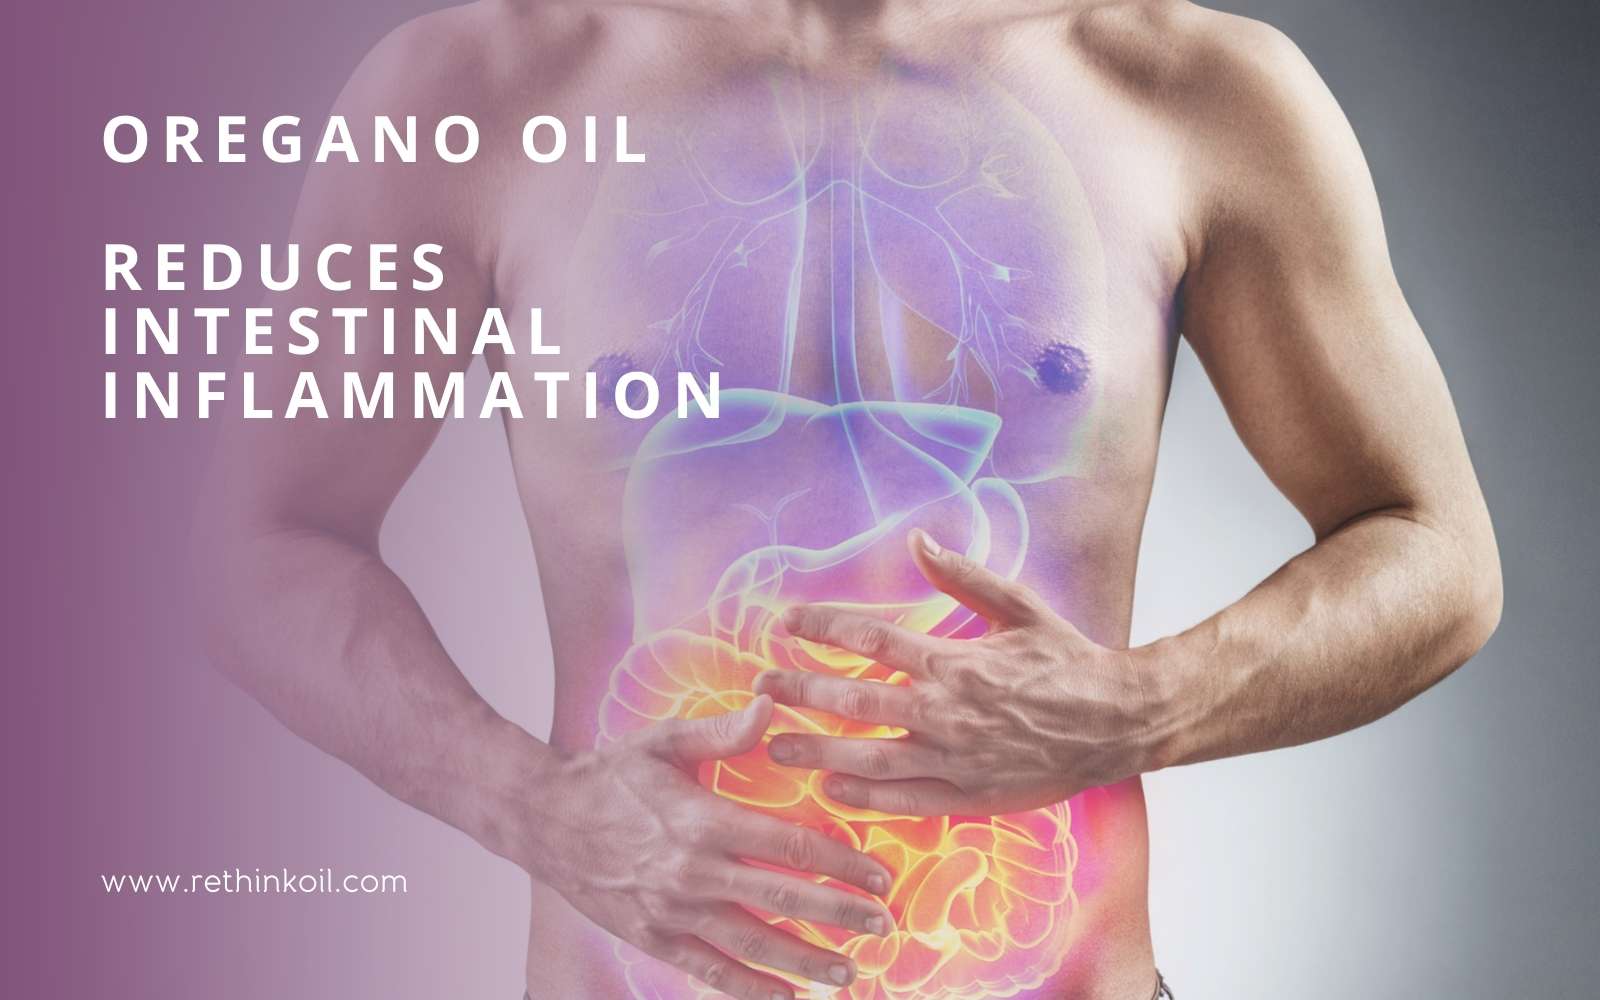 ReThinkOil Blog Oregano Oil Reduces Intestinal Inflammation